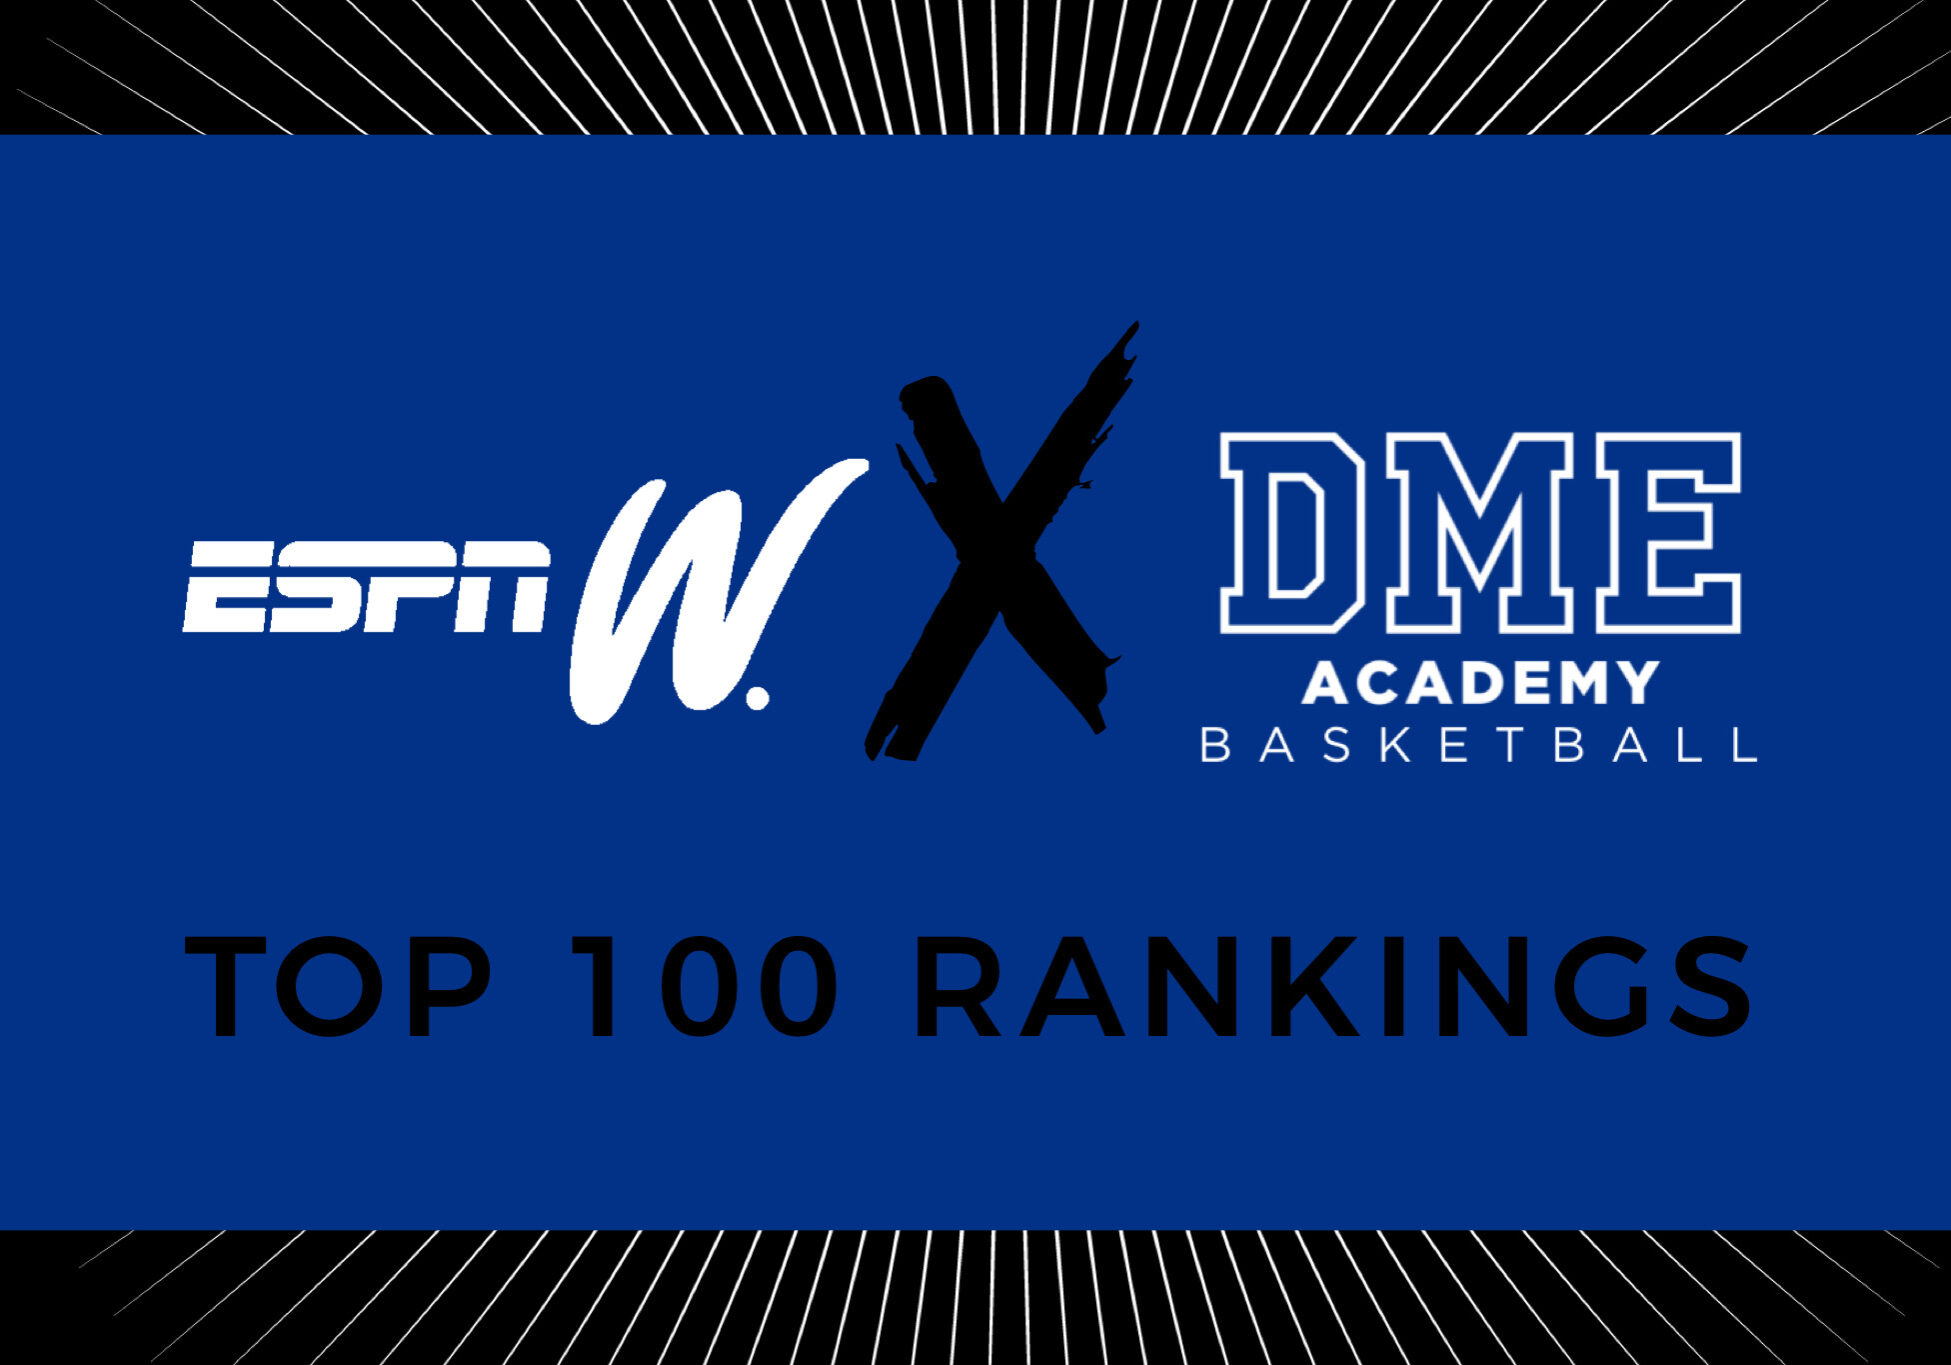 DME Academy ESPNW Top 100